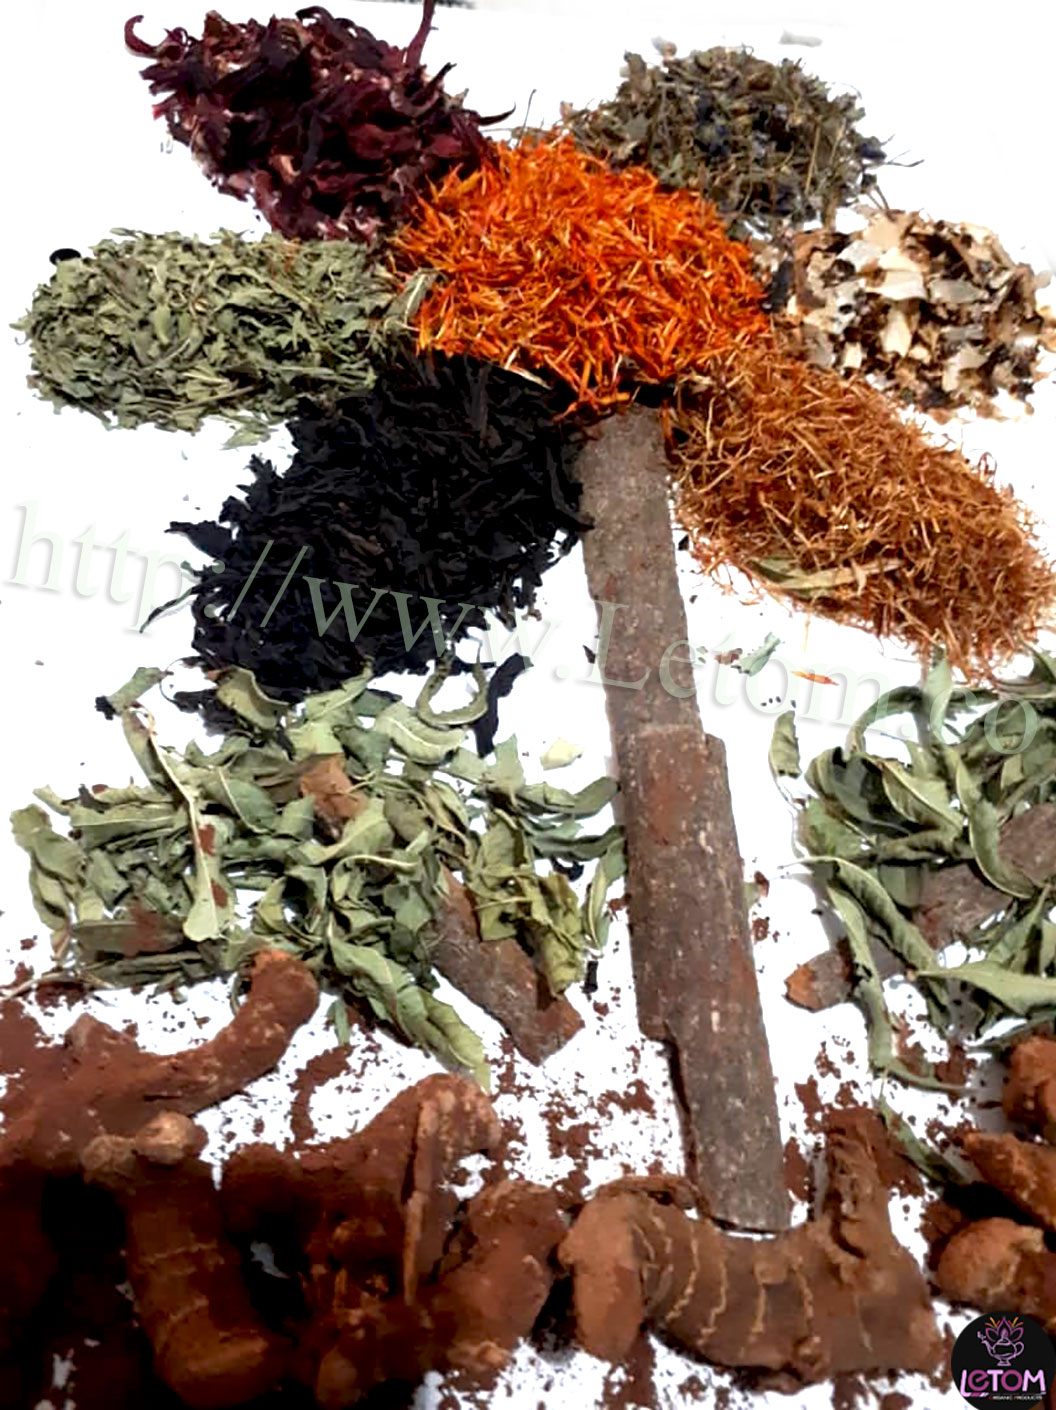 Dried tarragon in wholesale letom herbs